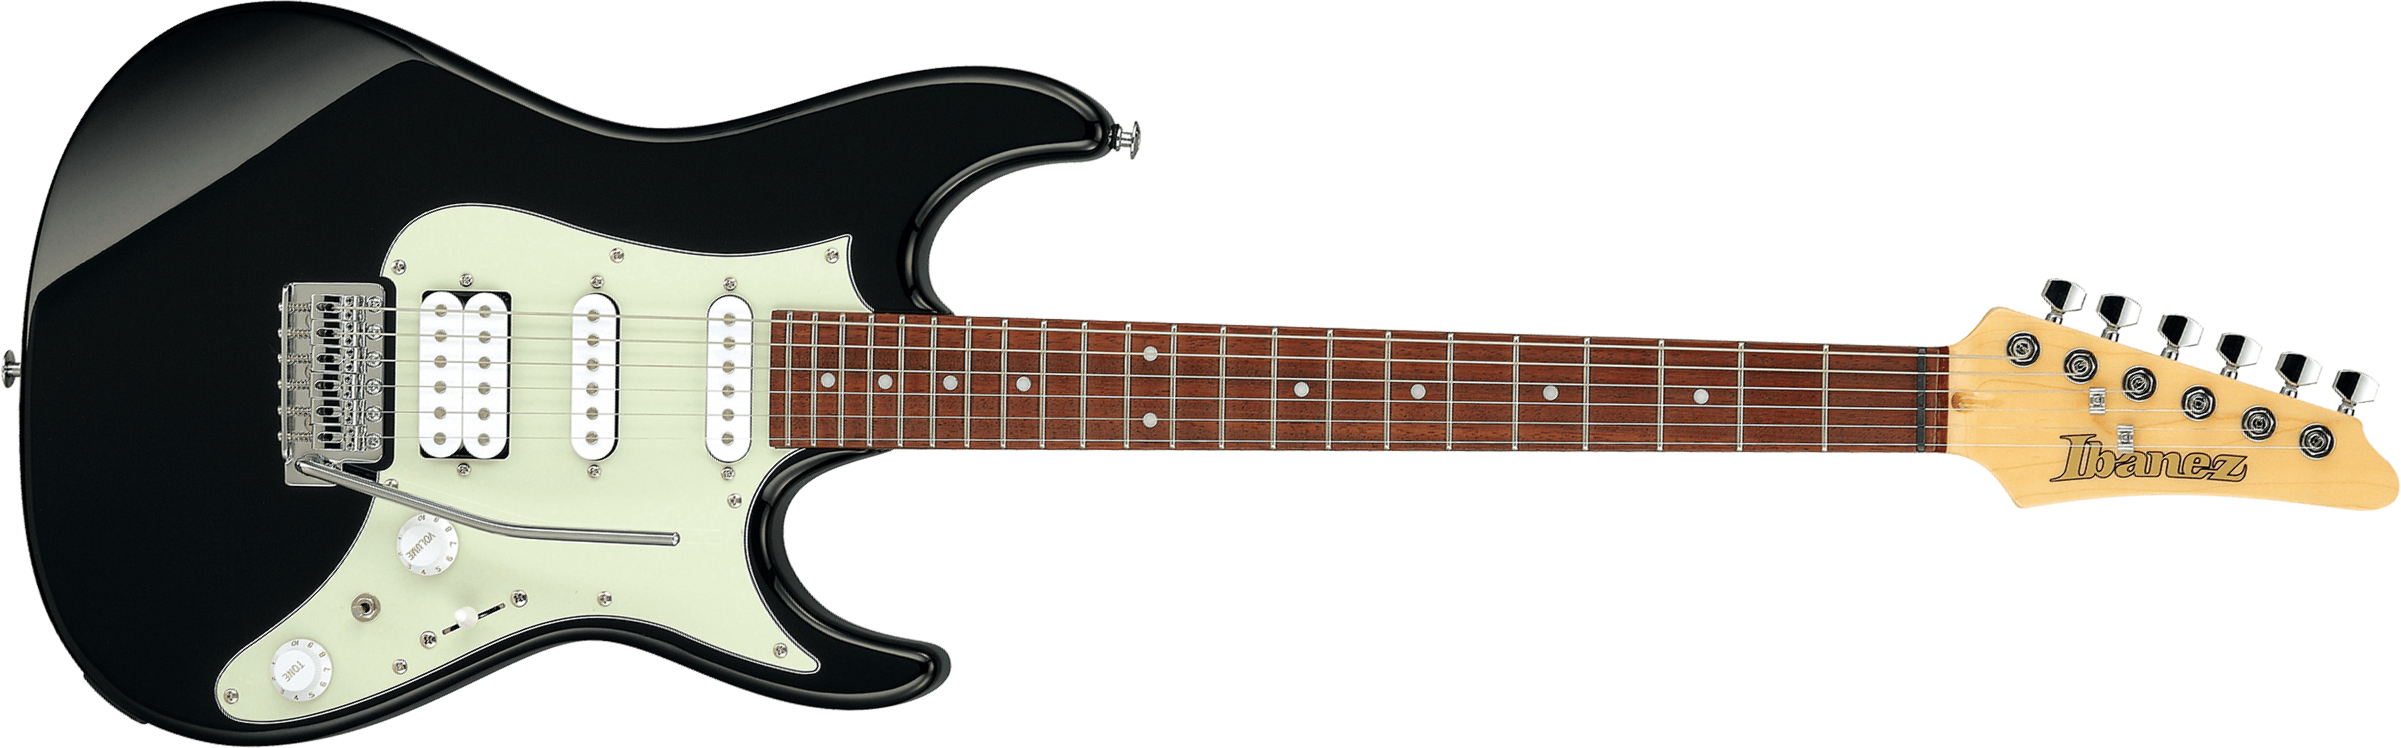 Ibanez Azes 40 Bk Standard Hss Trem Jat - Black - Str shape electric guitar - Main picture